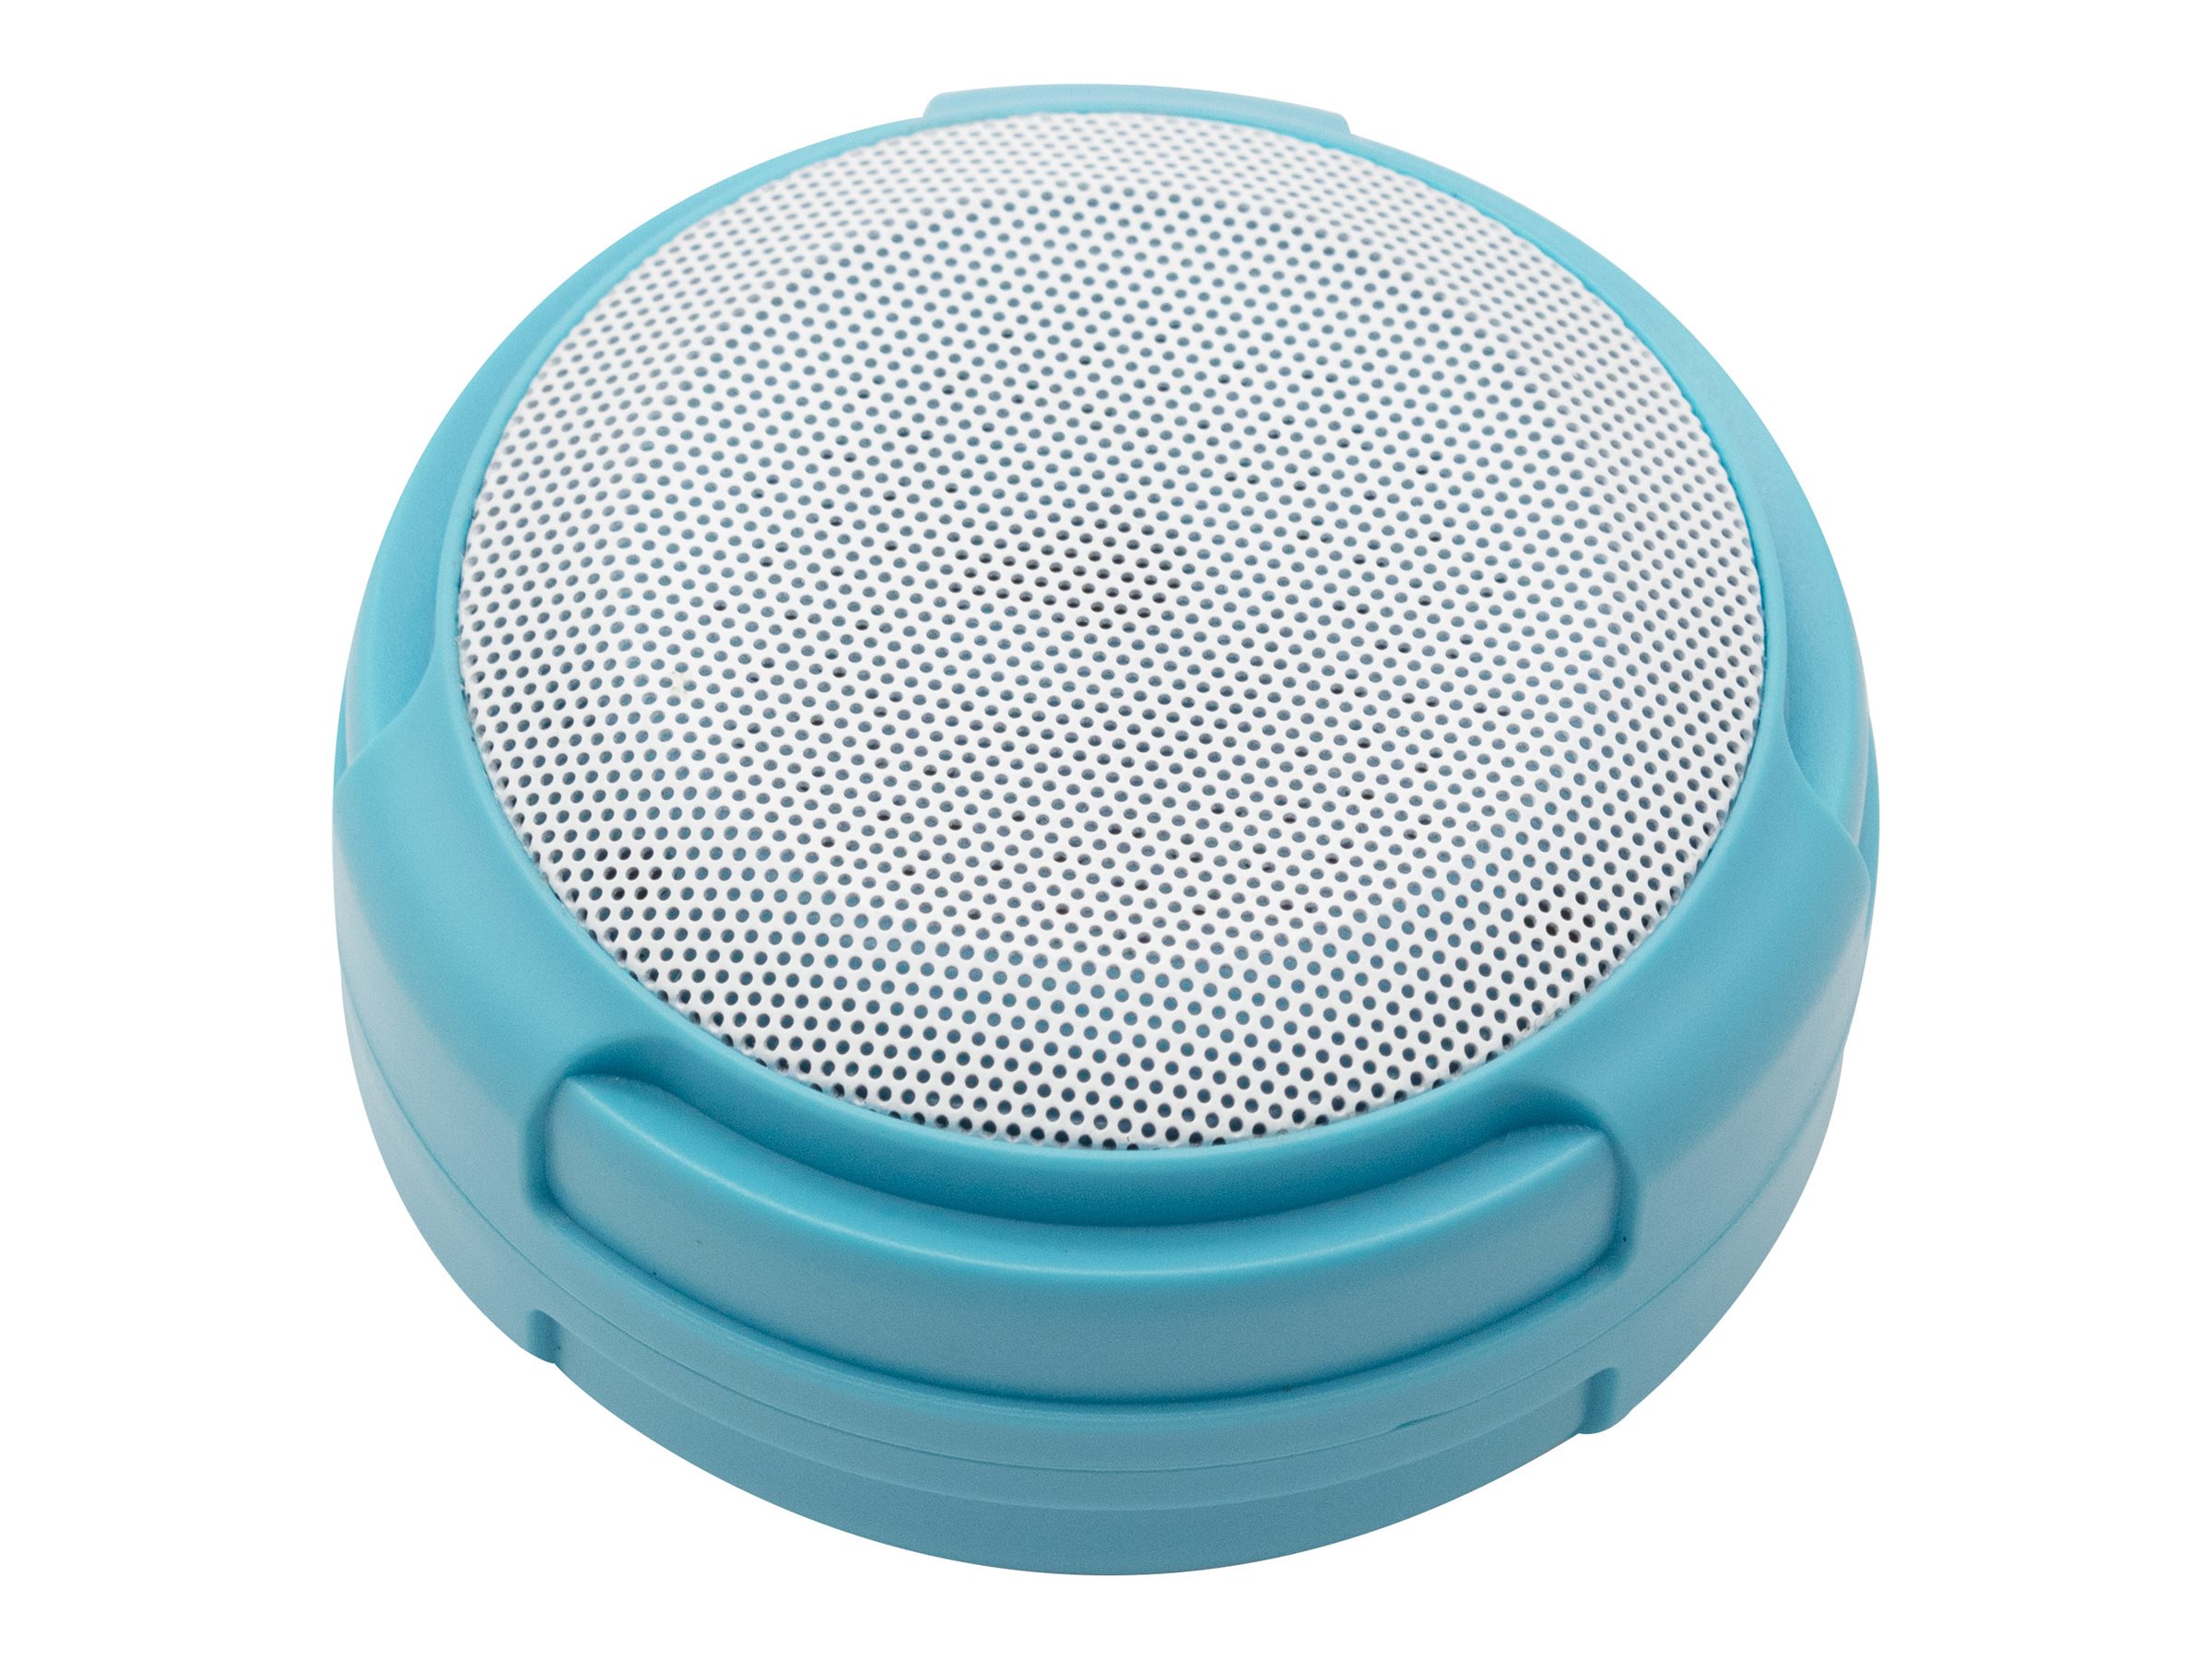 SYLVANIA Portable Bluetooth Speaker - SP749-BLUE